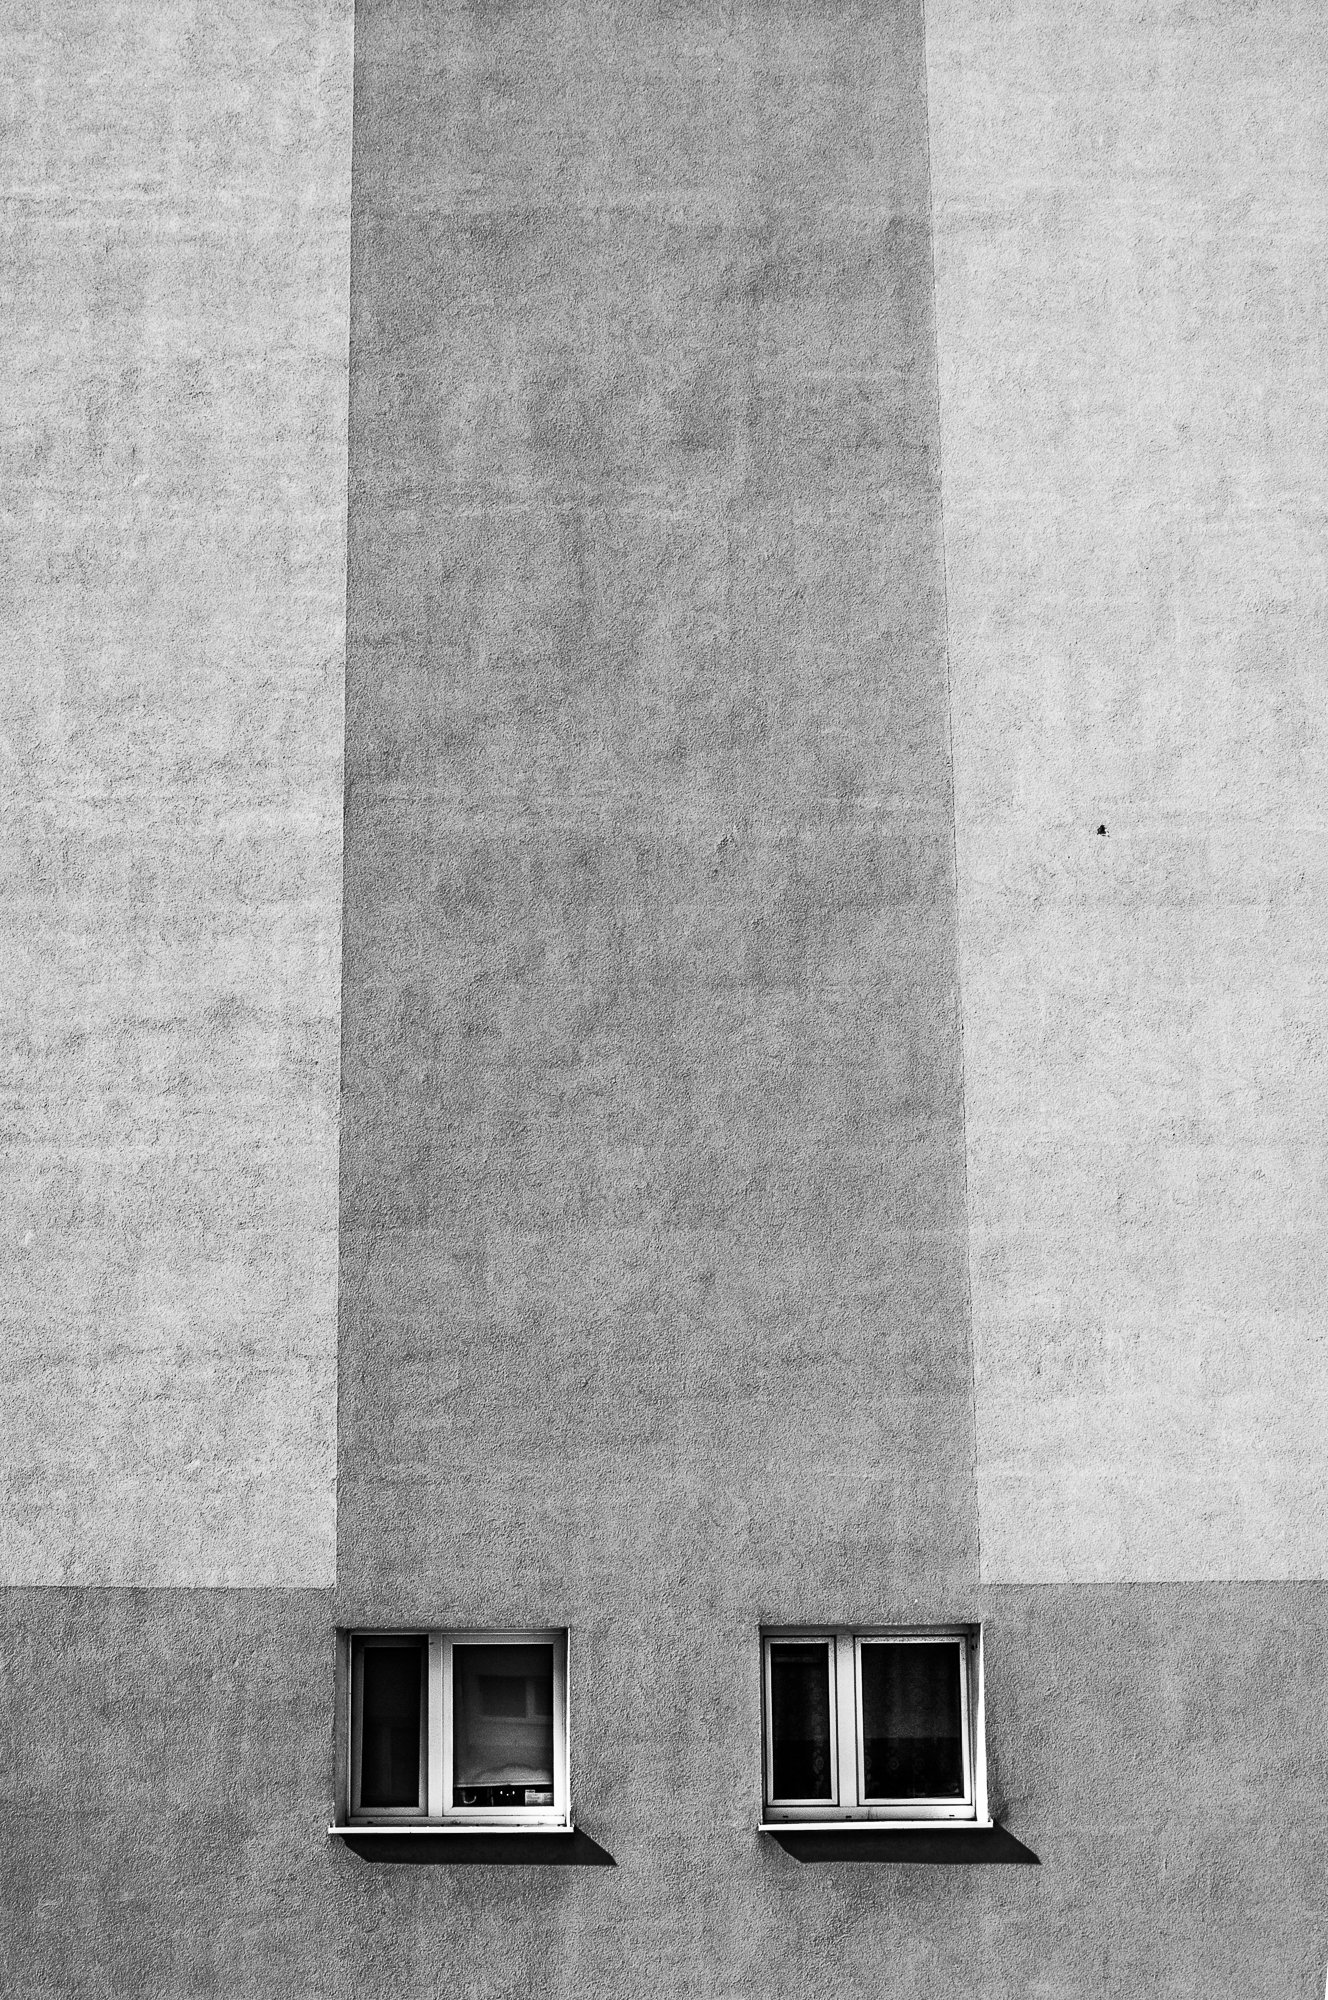 Adam Mazek Photography Warsaw 2017. Minimalism. Double windows on the wall. Concrete. "Negation of the End." Inspired by Sheeler. "Negacja Końca"